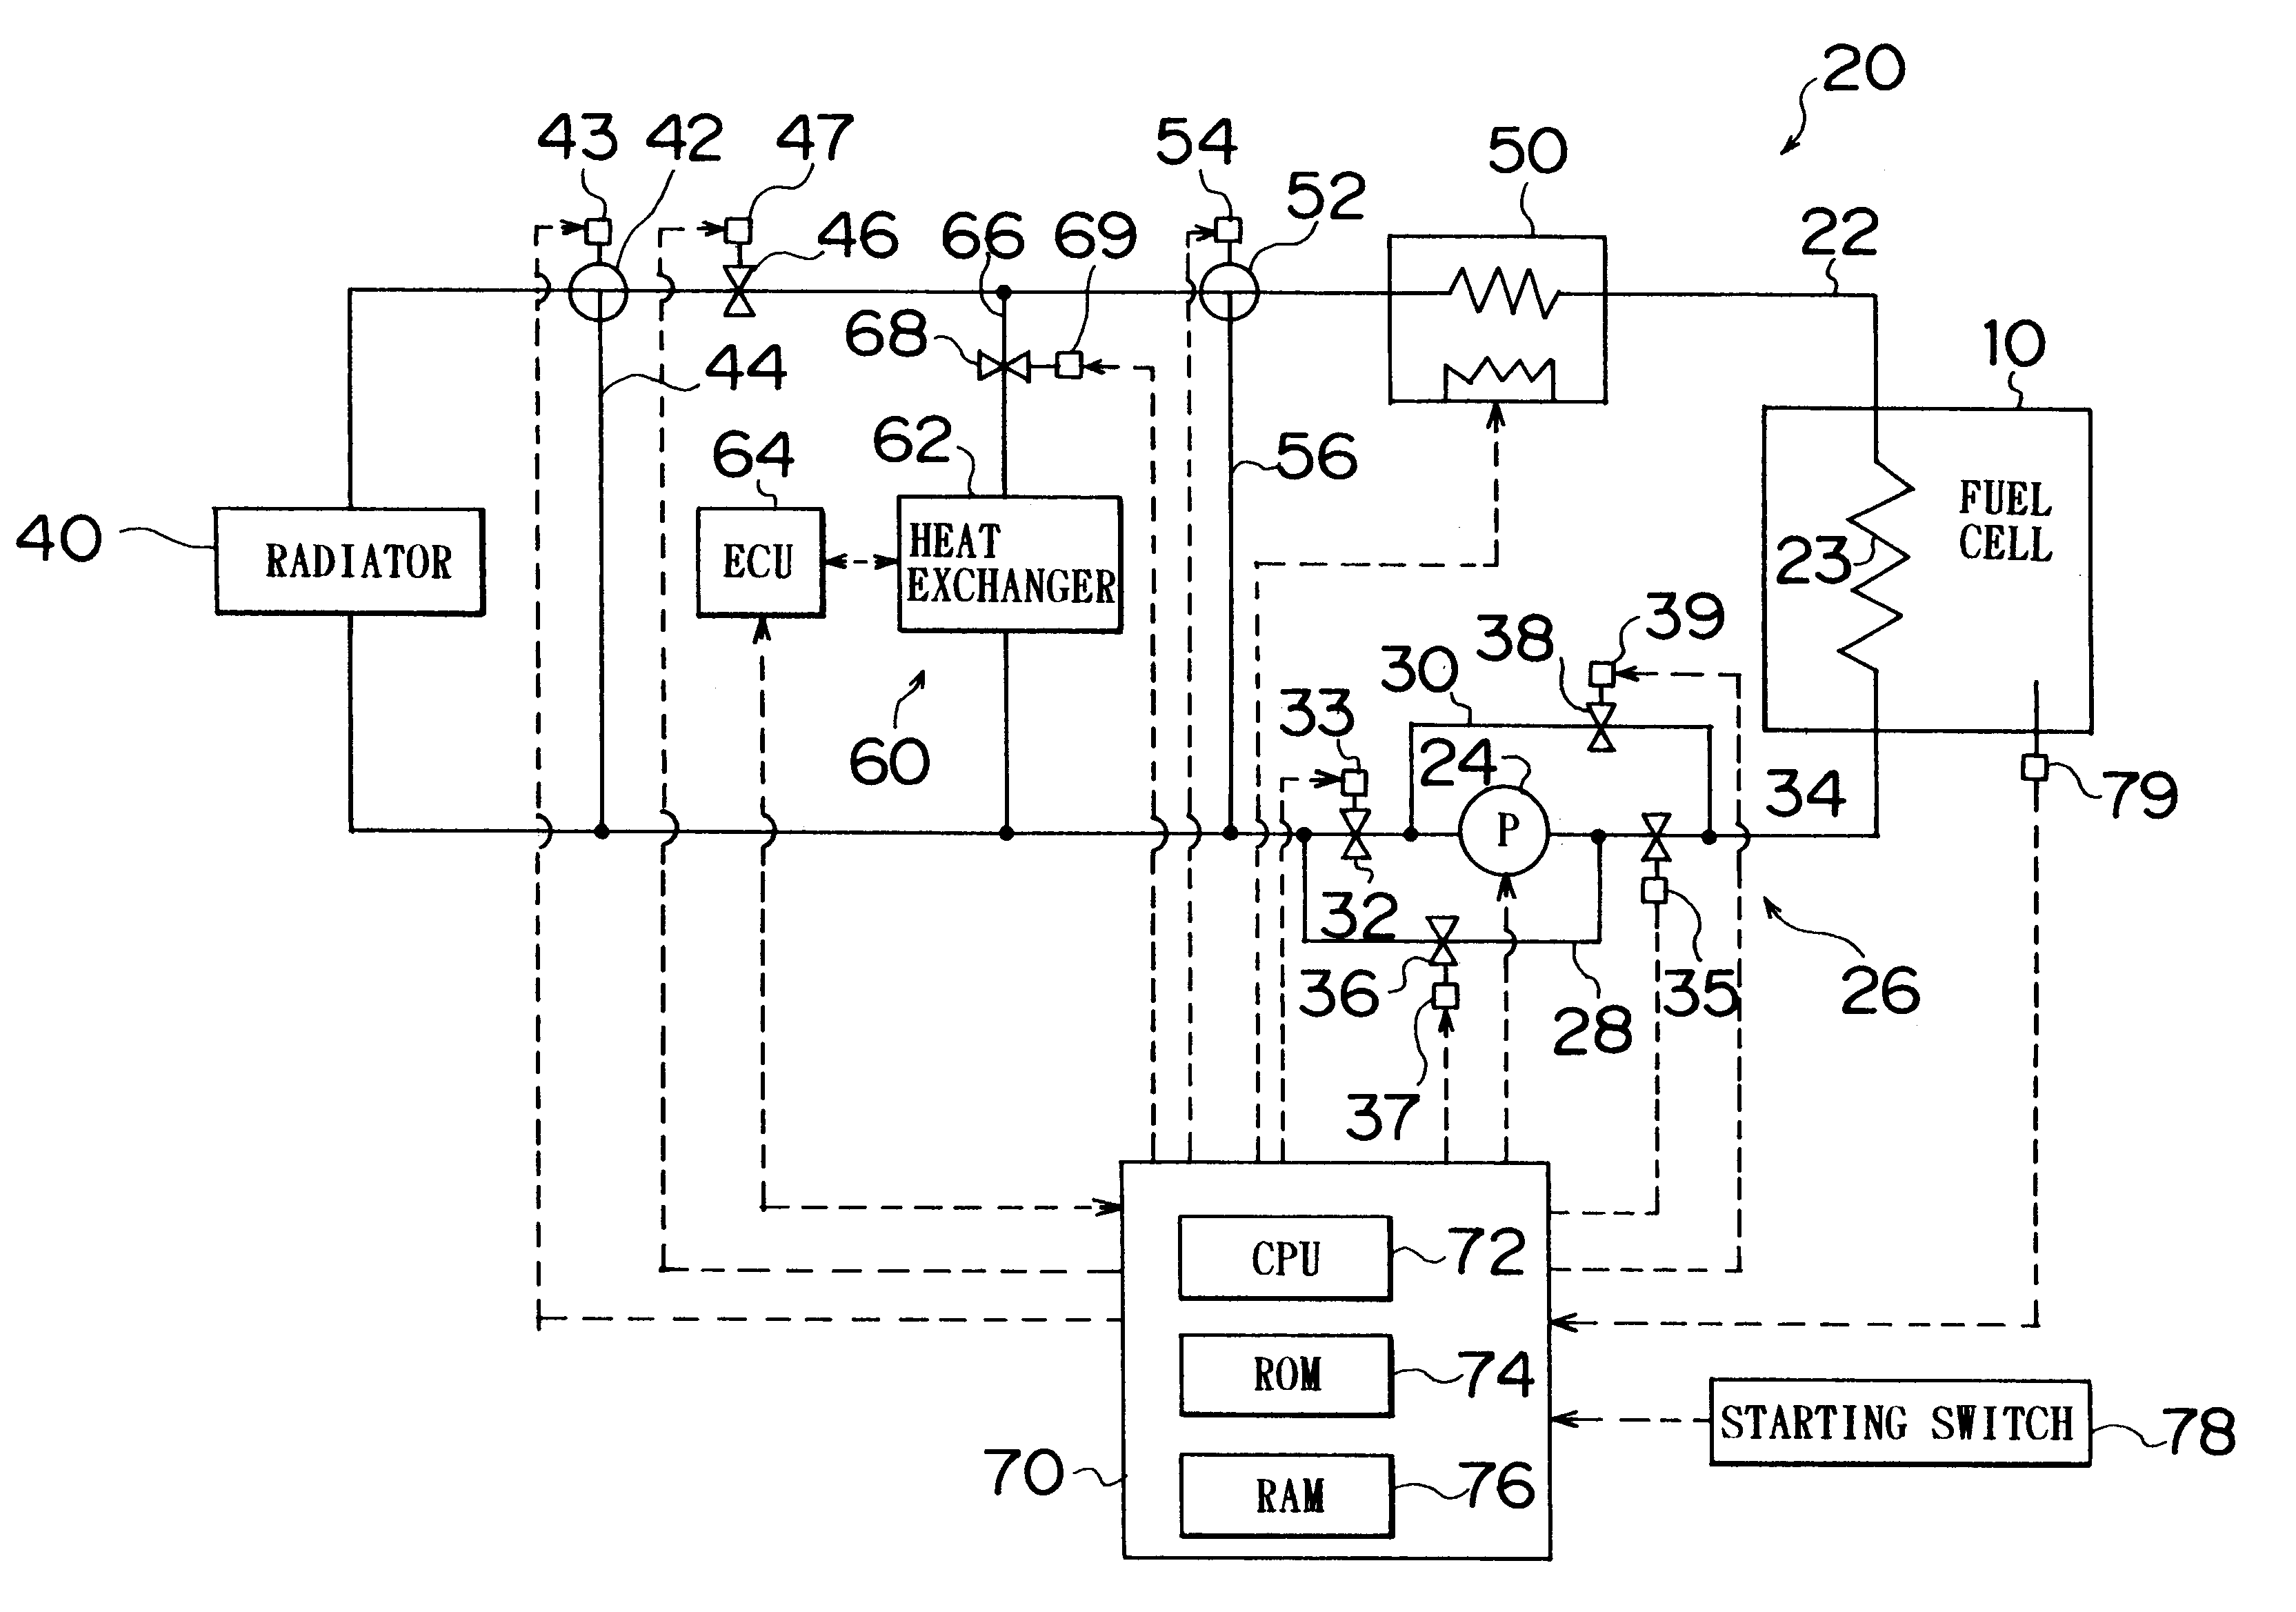 Temperature regulator for fuel cell